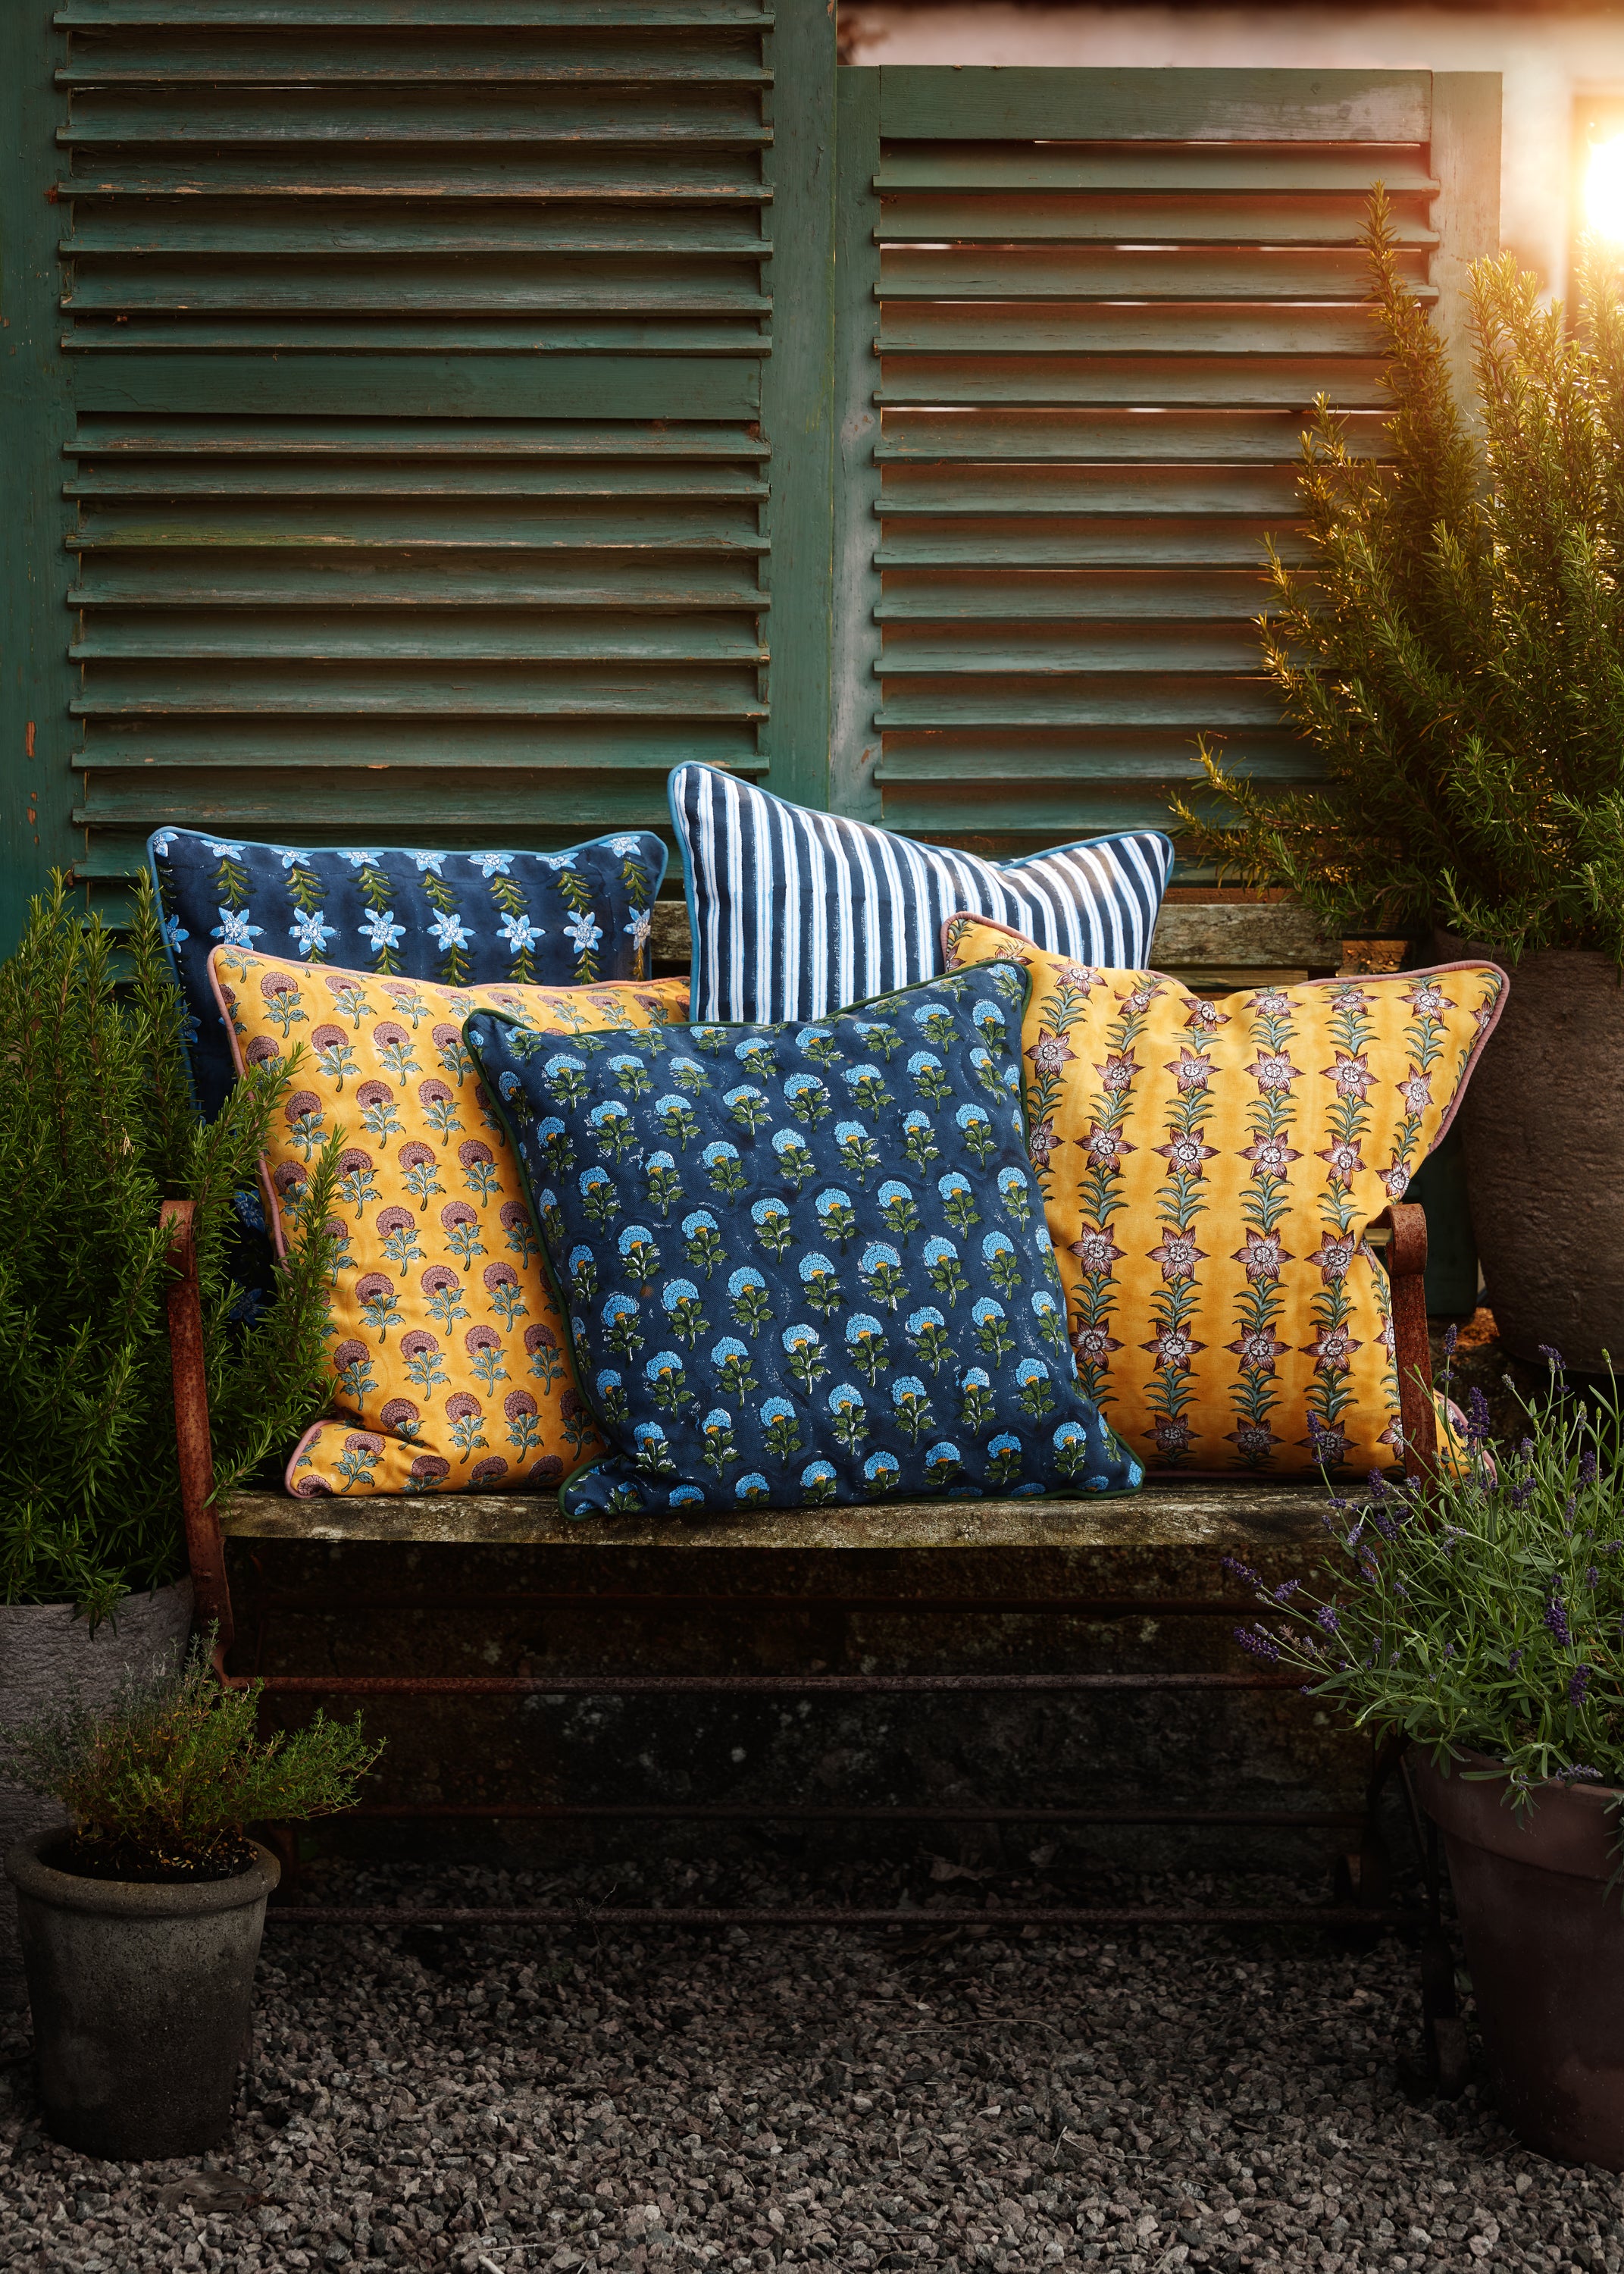 Garland cushion in Navy Blue